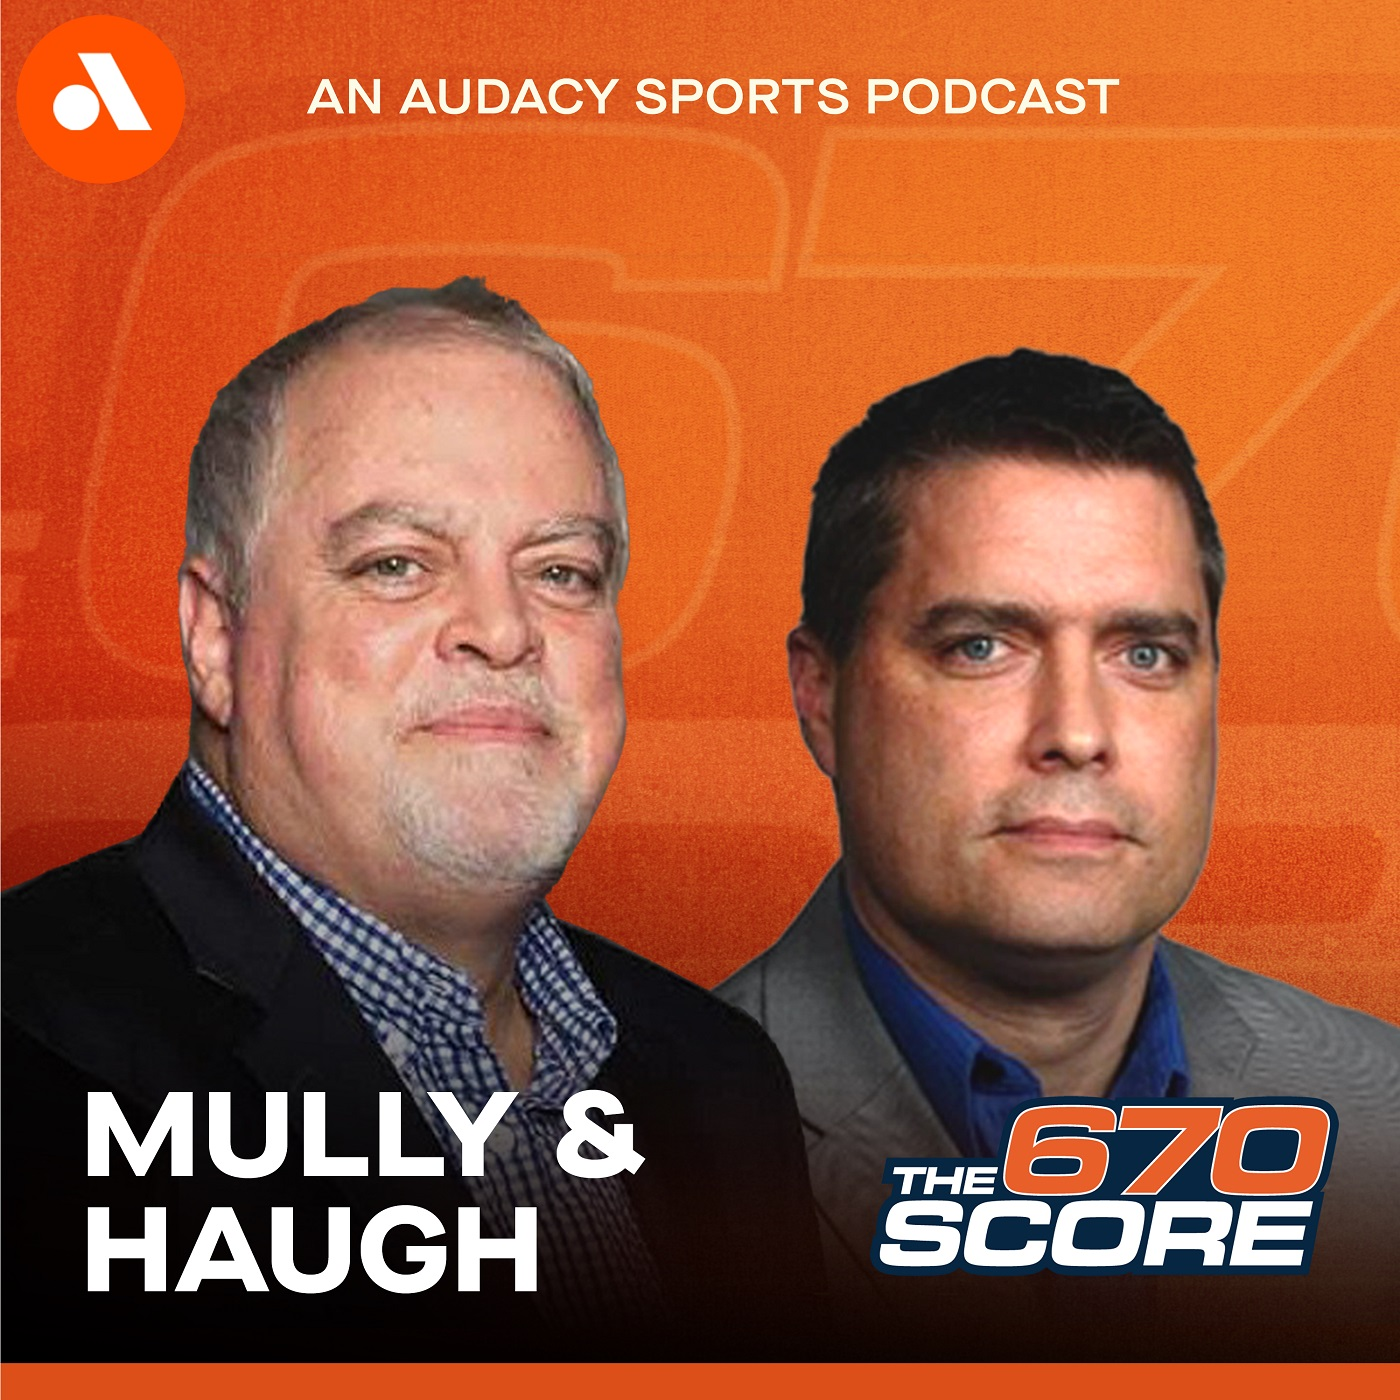 Mully & Haugh: Jon Heyman & Steve Stone interviews (Hour 4)